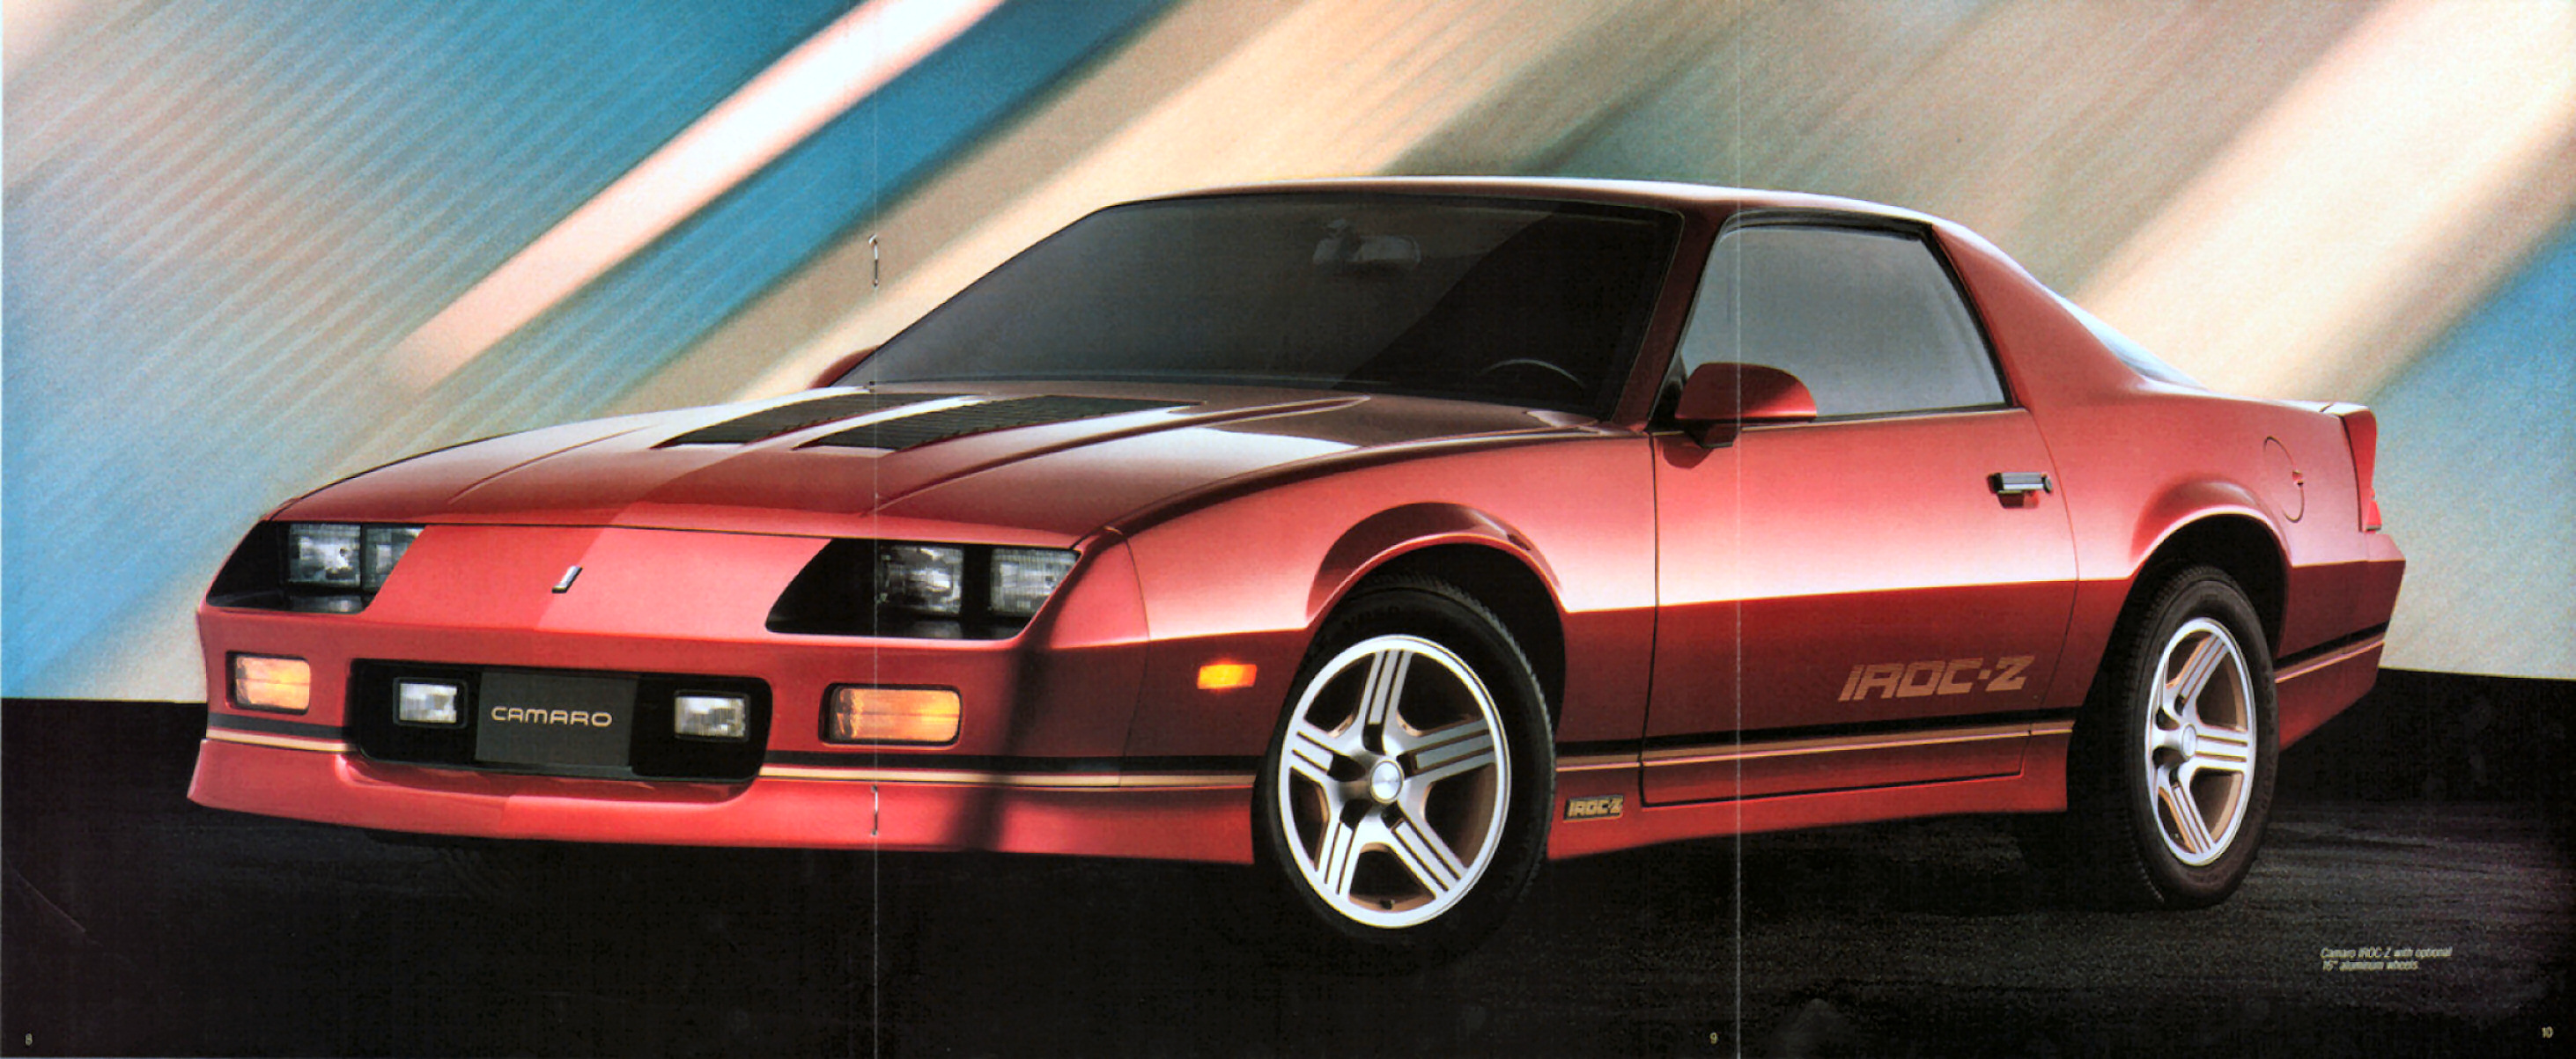 1988_Chevrolet_Camaro-08-09-10